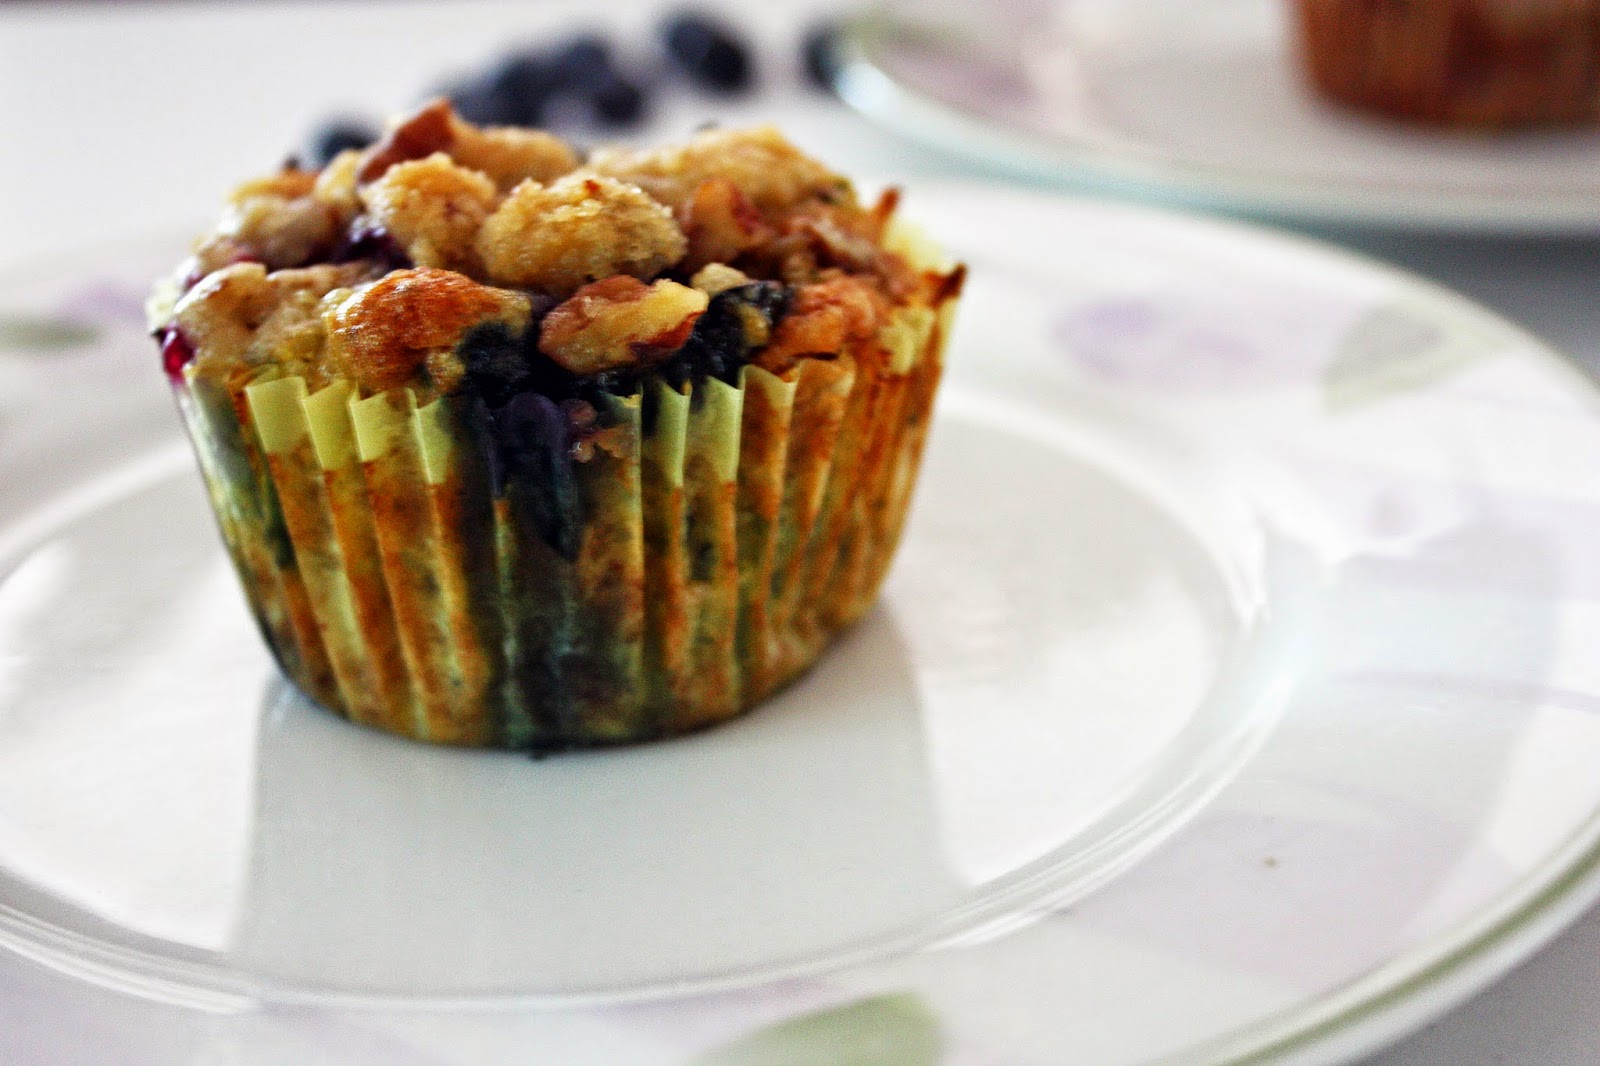 vegan lemon blueberry zucchini muffins with pecan streusel